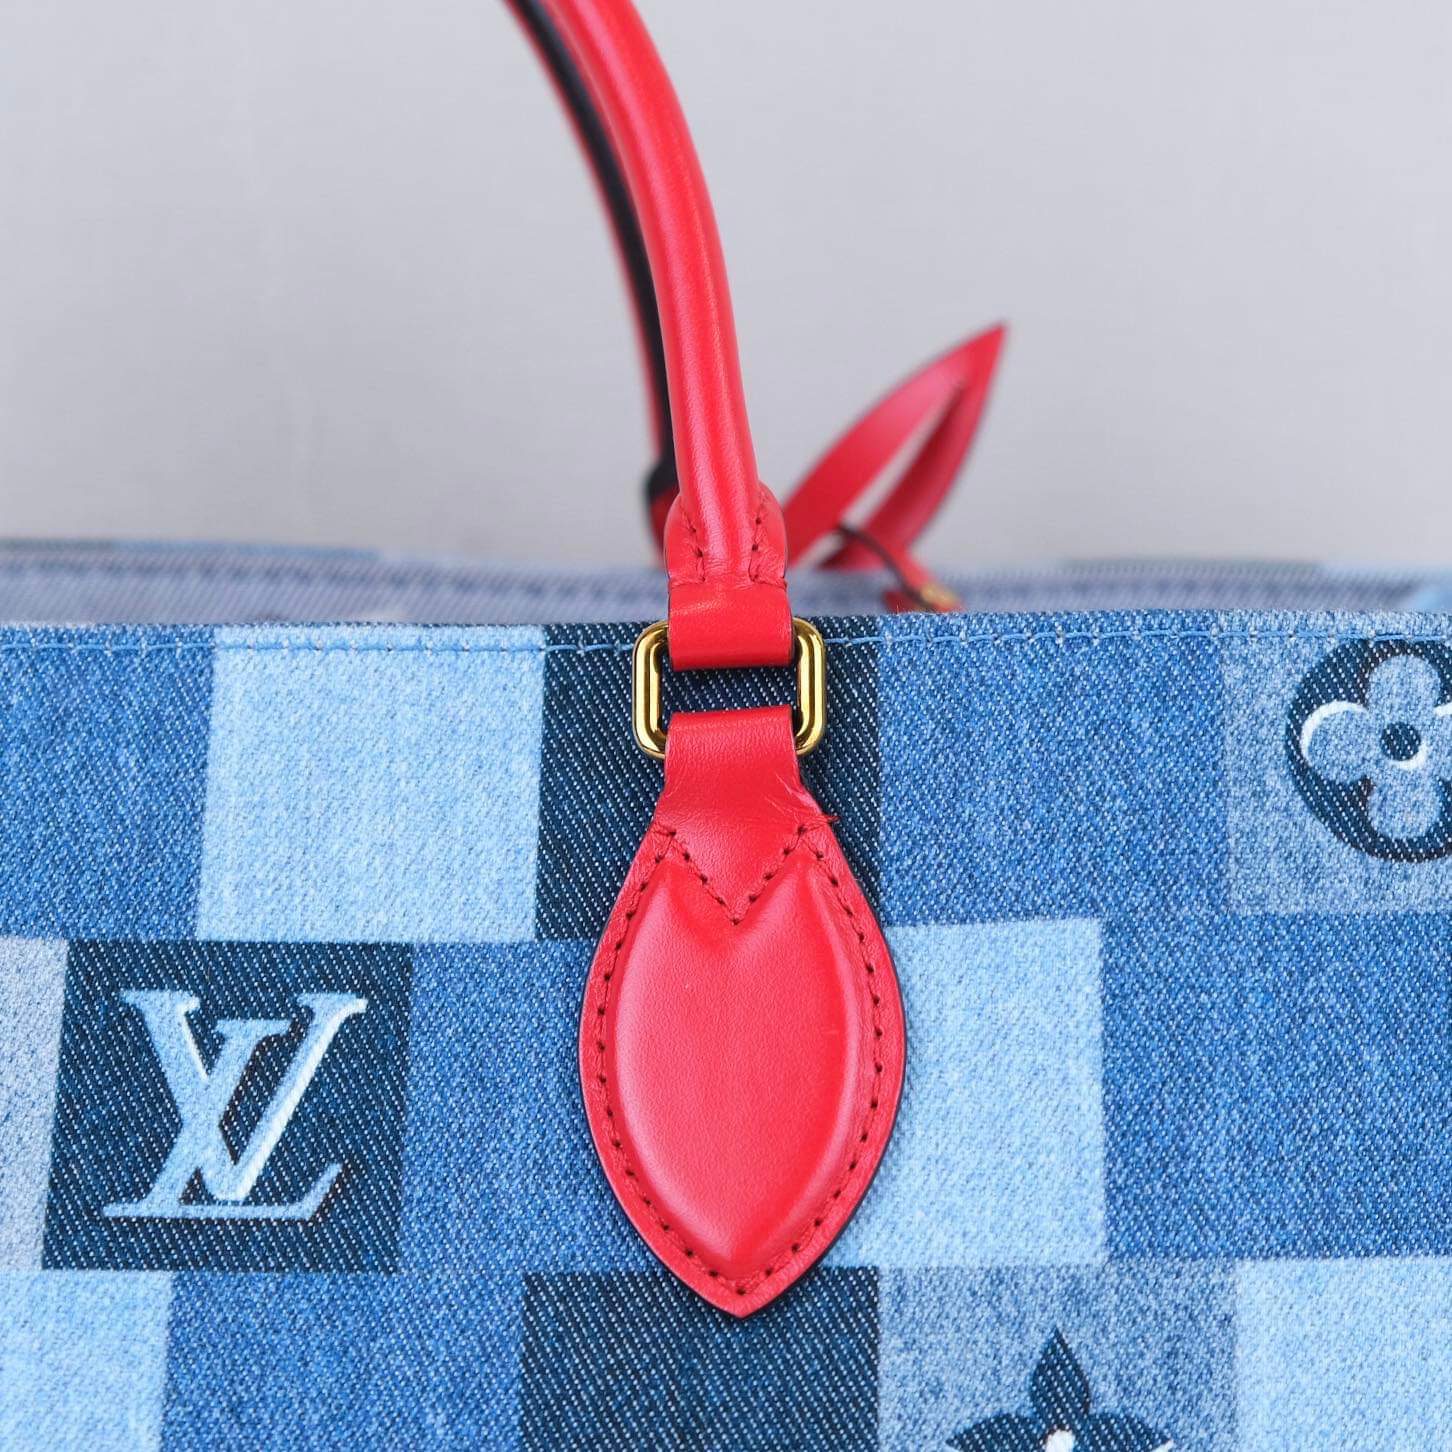 Auth Louis Vuitton Monogram Denim On-the-Go GM M44992 Women's Handbag